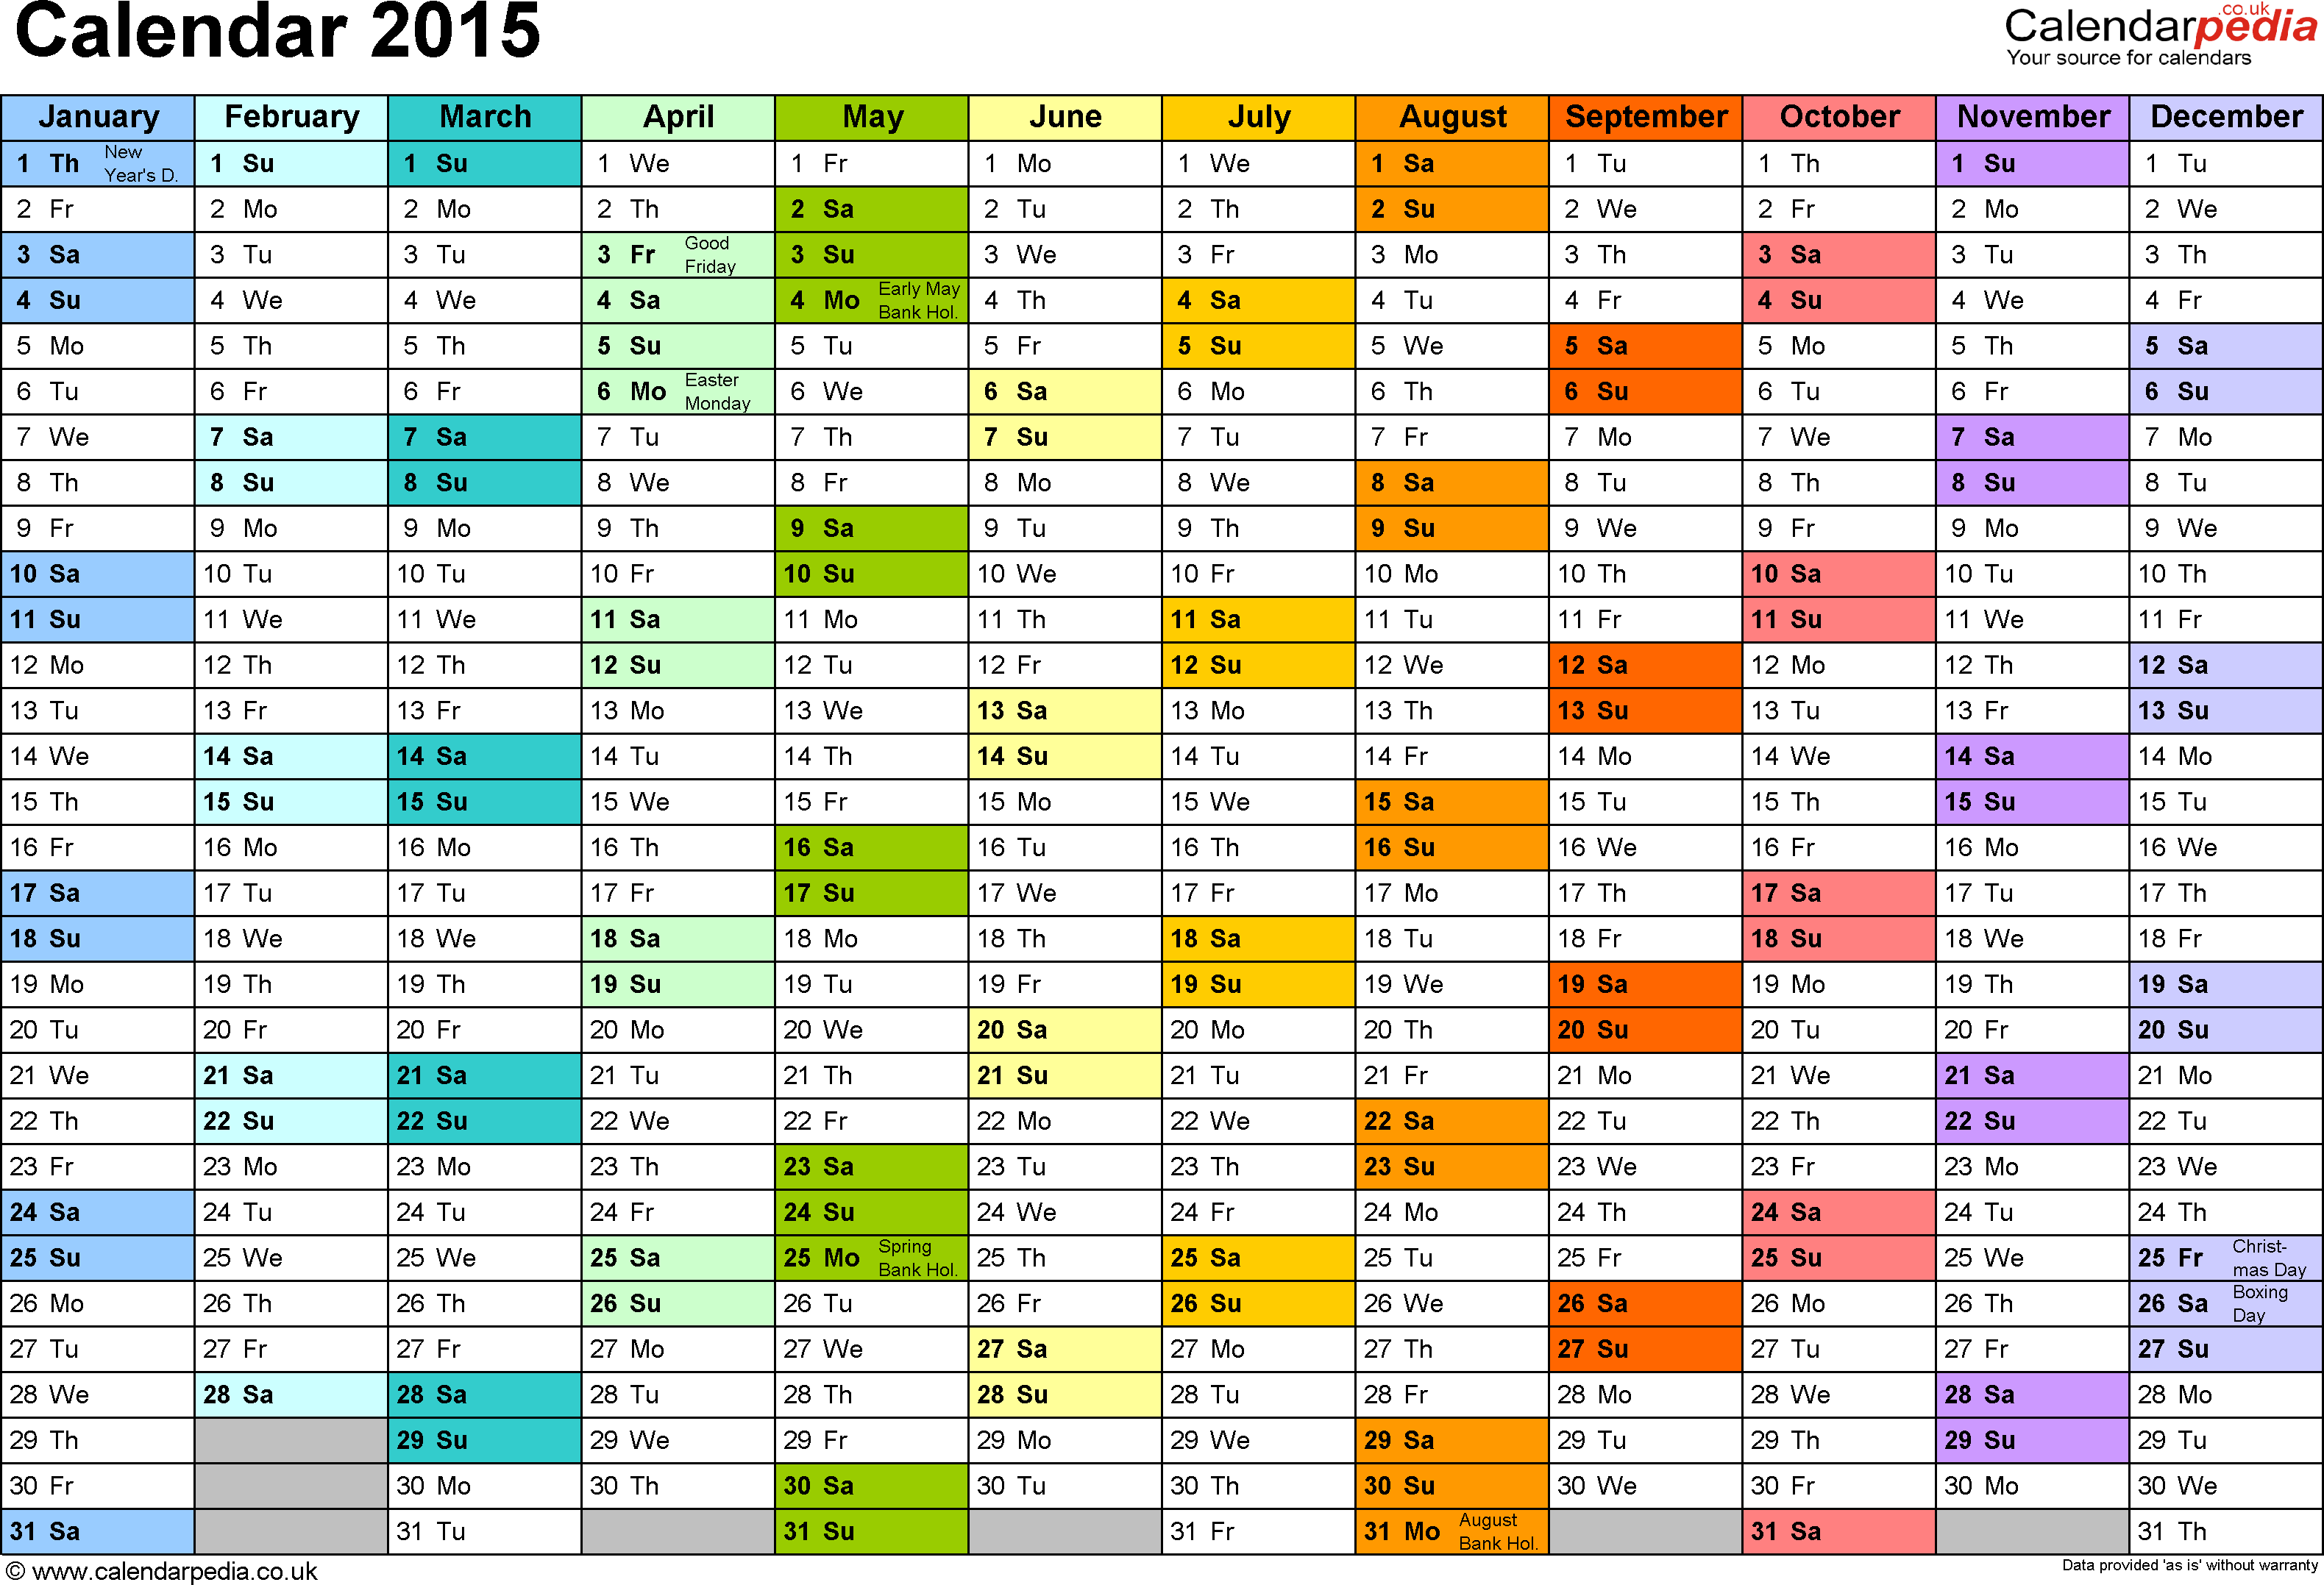 Weekly Year Calendar Year 2015 Calendar Monthly Pbzlqv